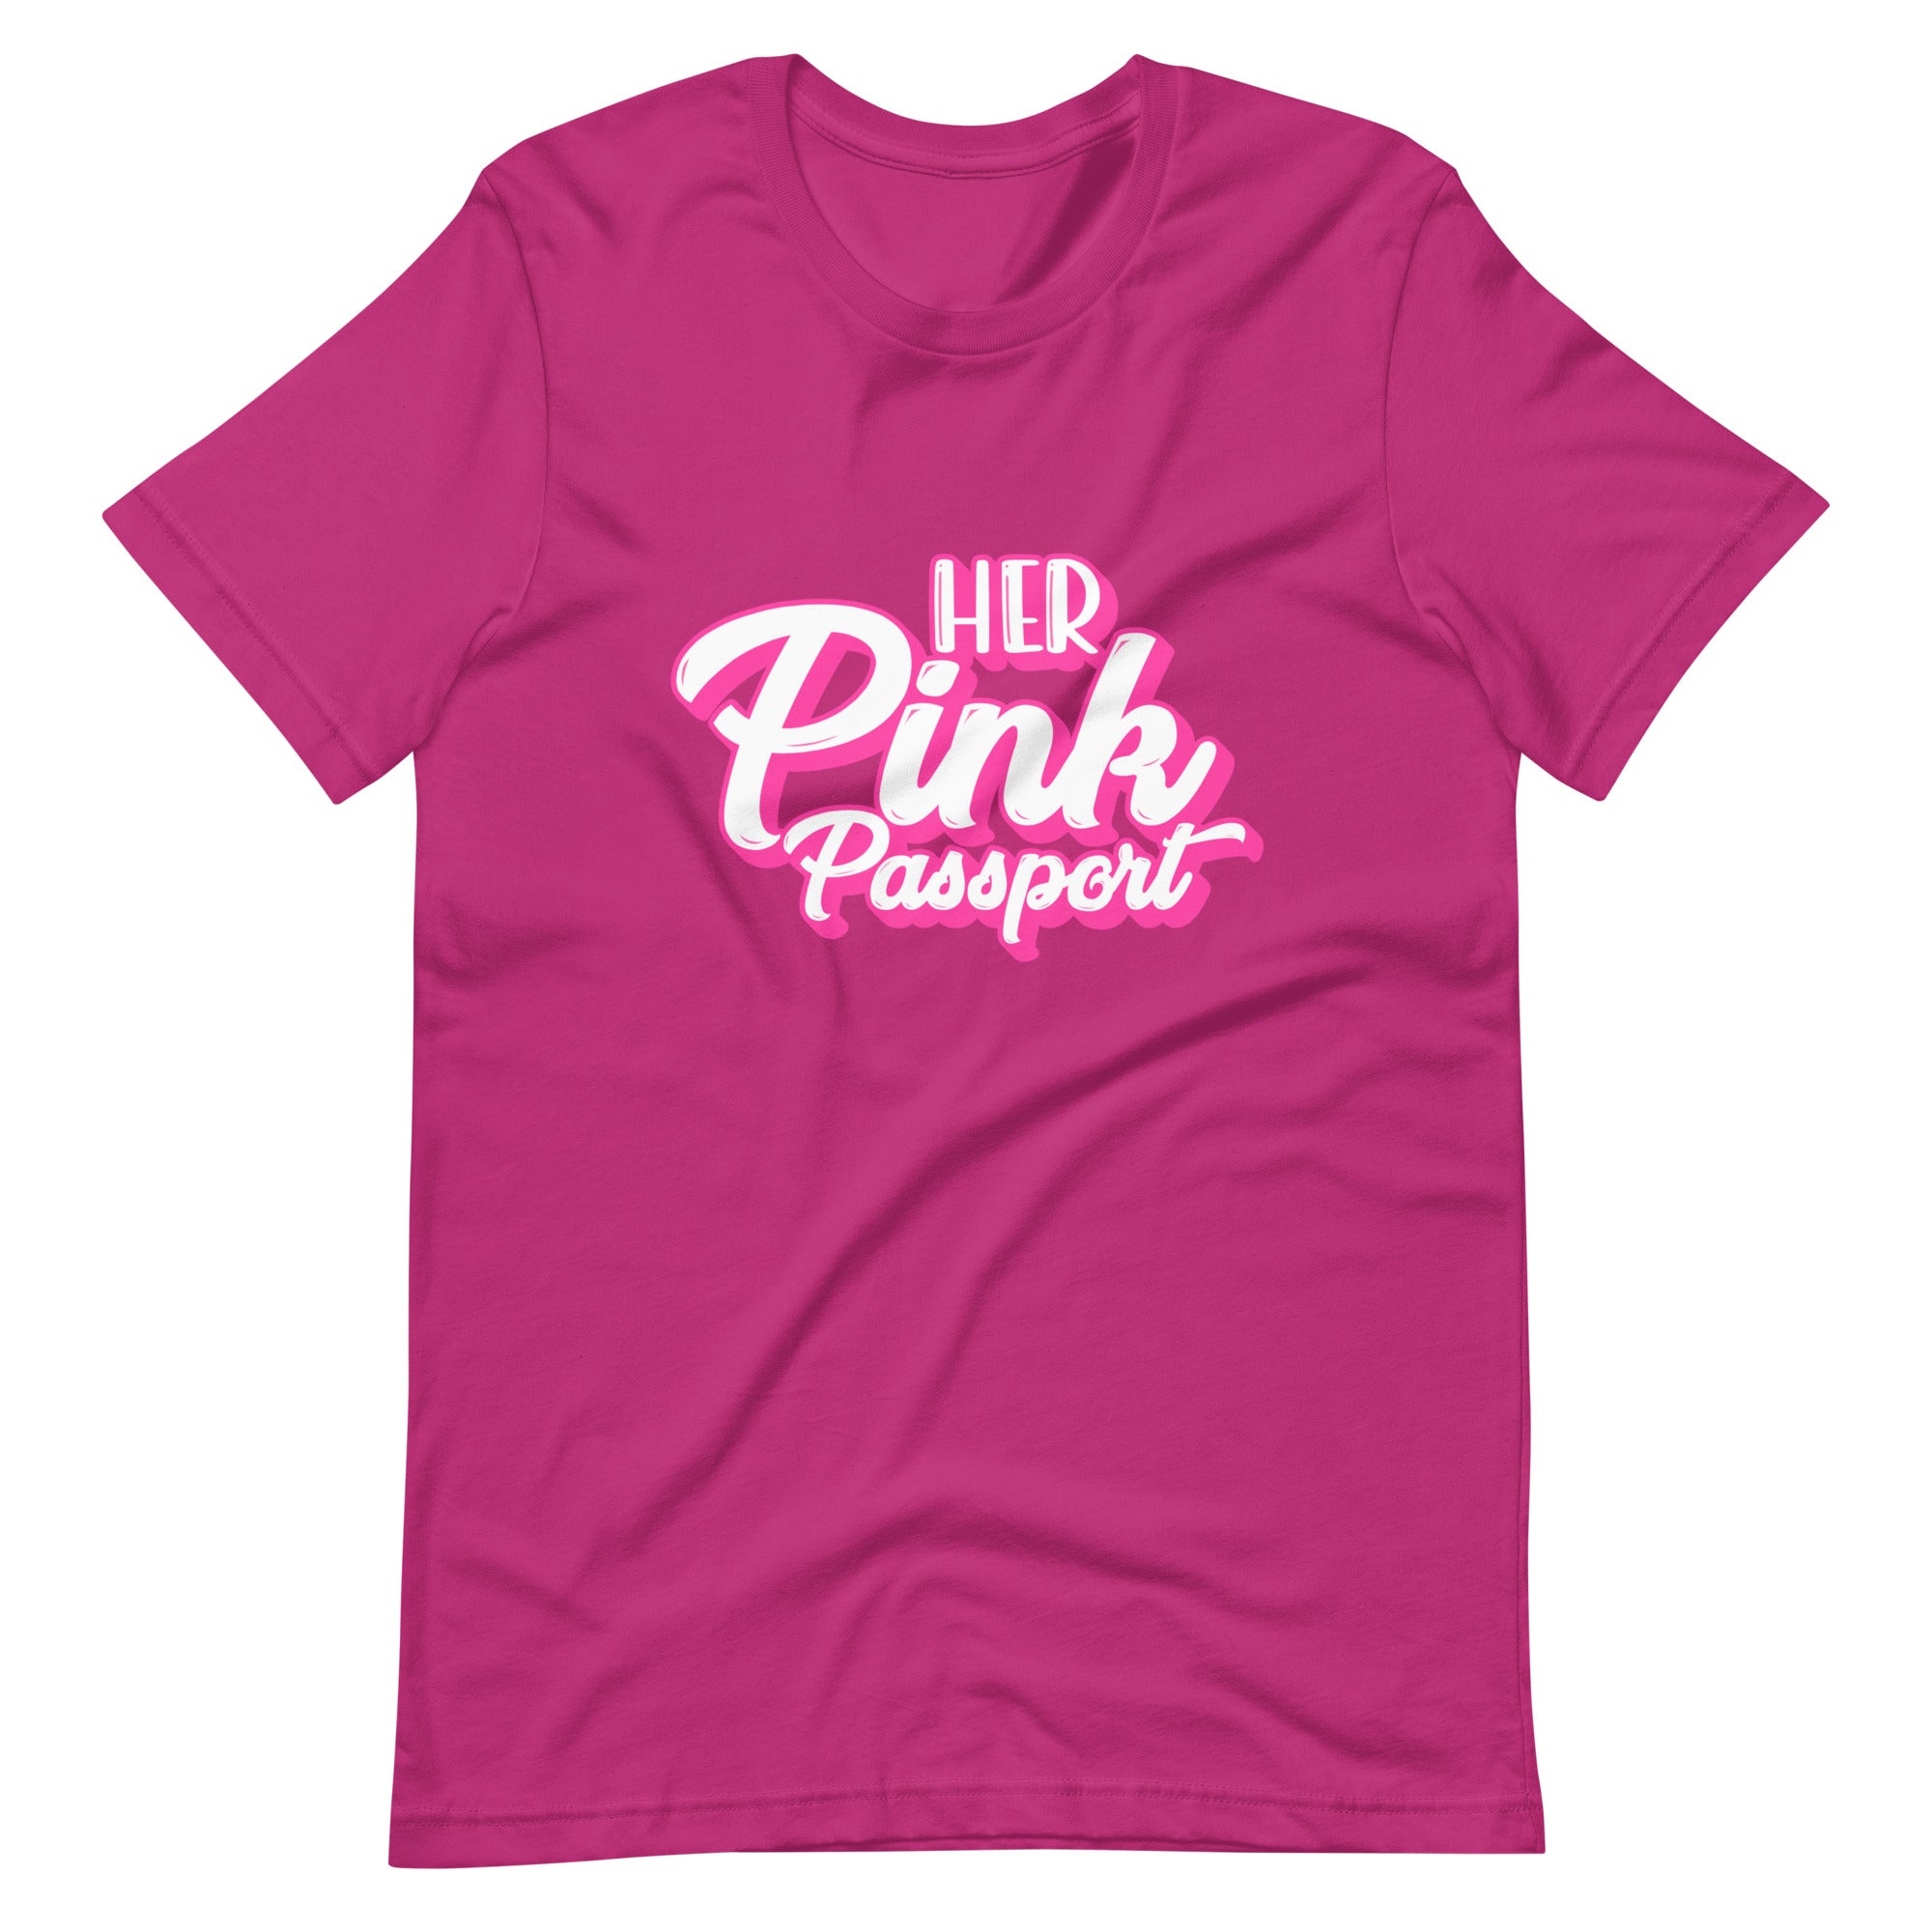 Her Pink Passport Signature T-Shirt